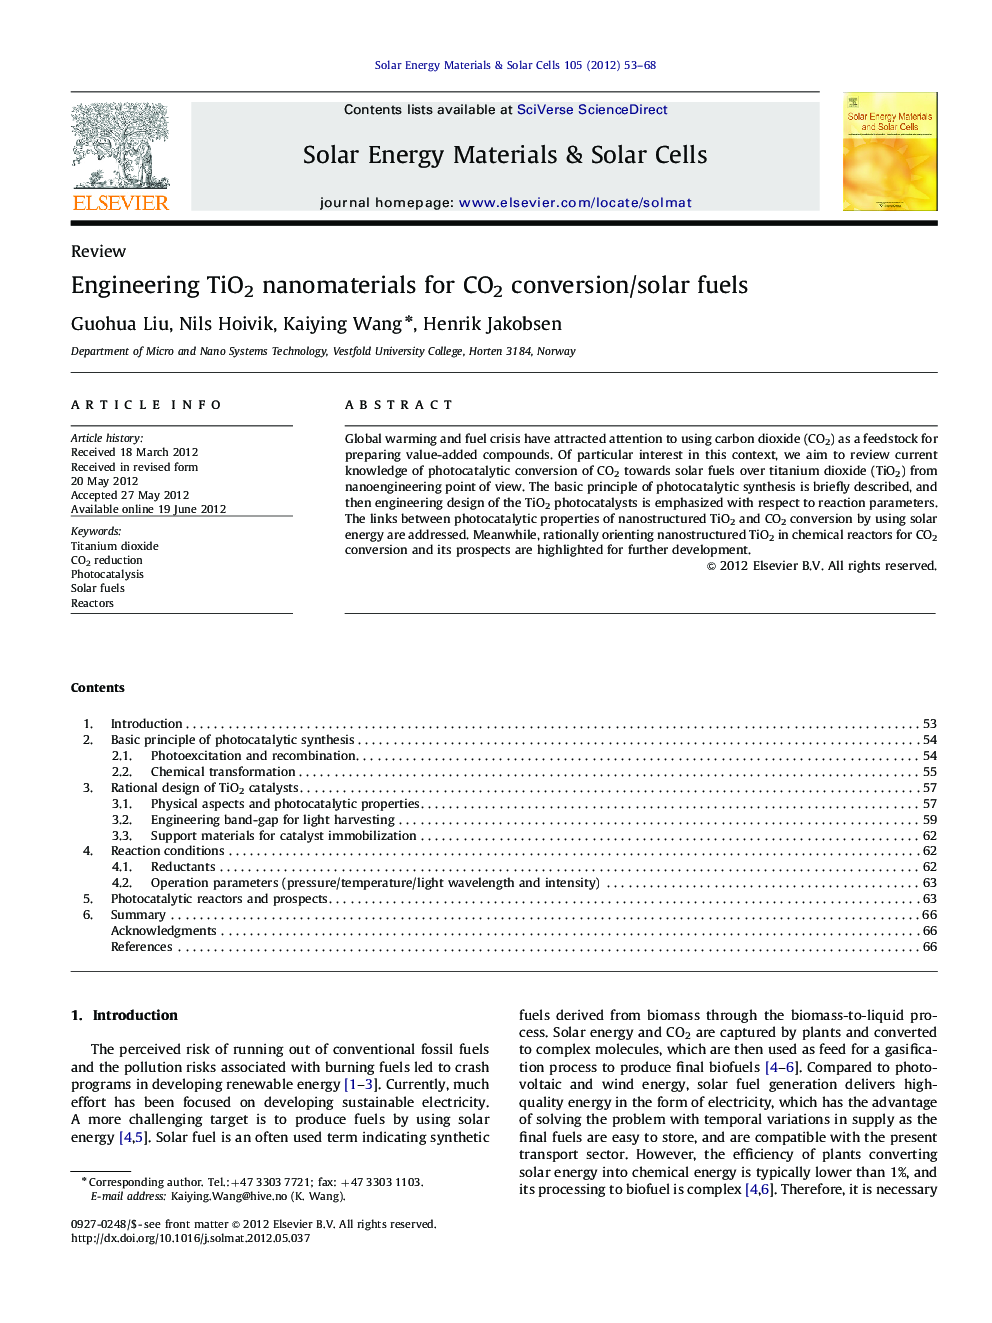 Engineering TiO2 nanomaterials for CO2 conversion/solar fuels